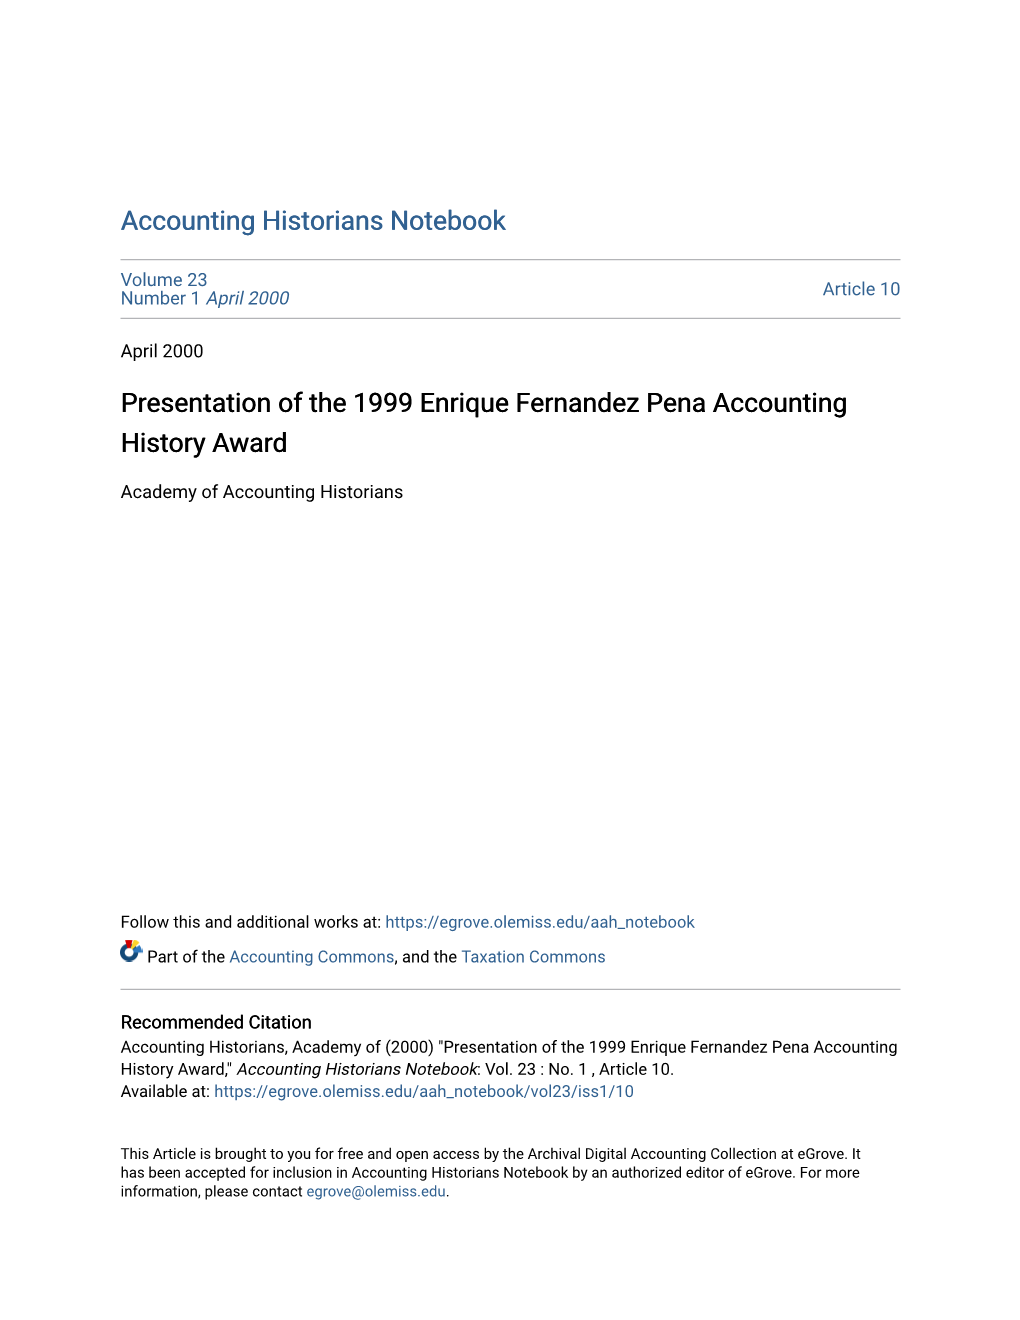 Presentation of the 1999 Enrique Fernandez Pena Accounting History Award